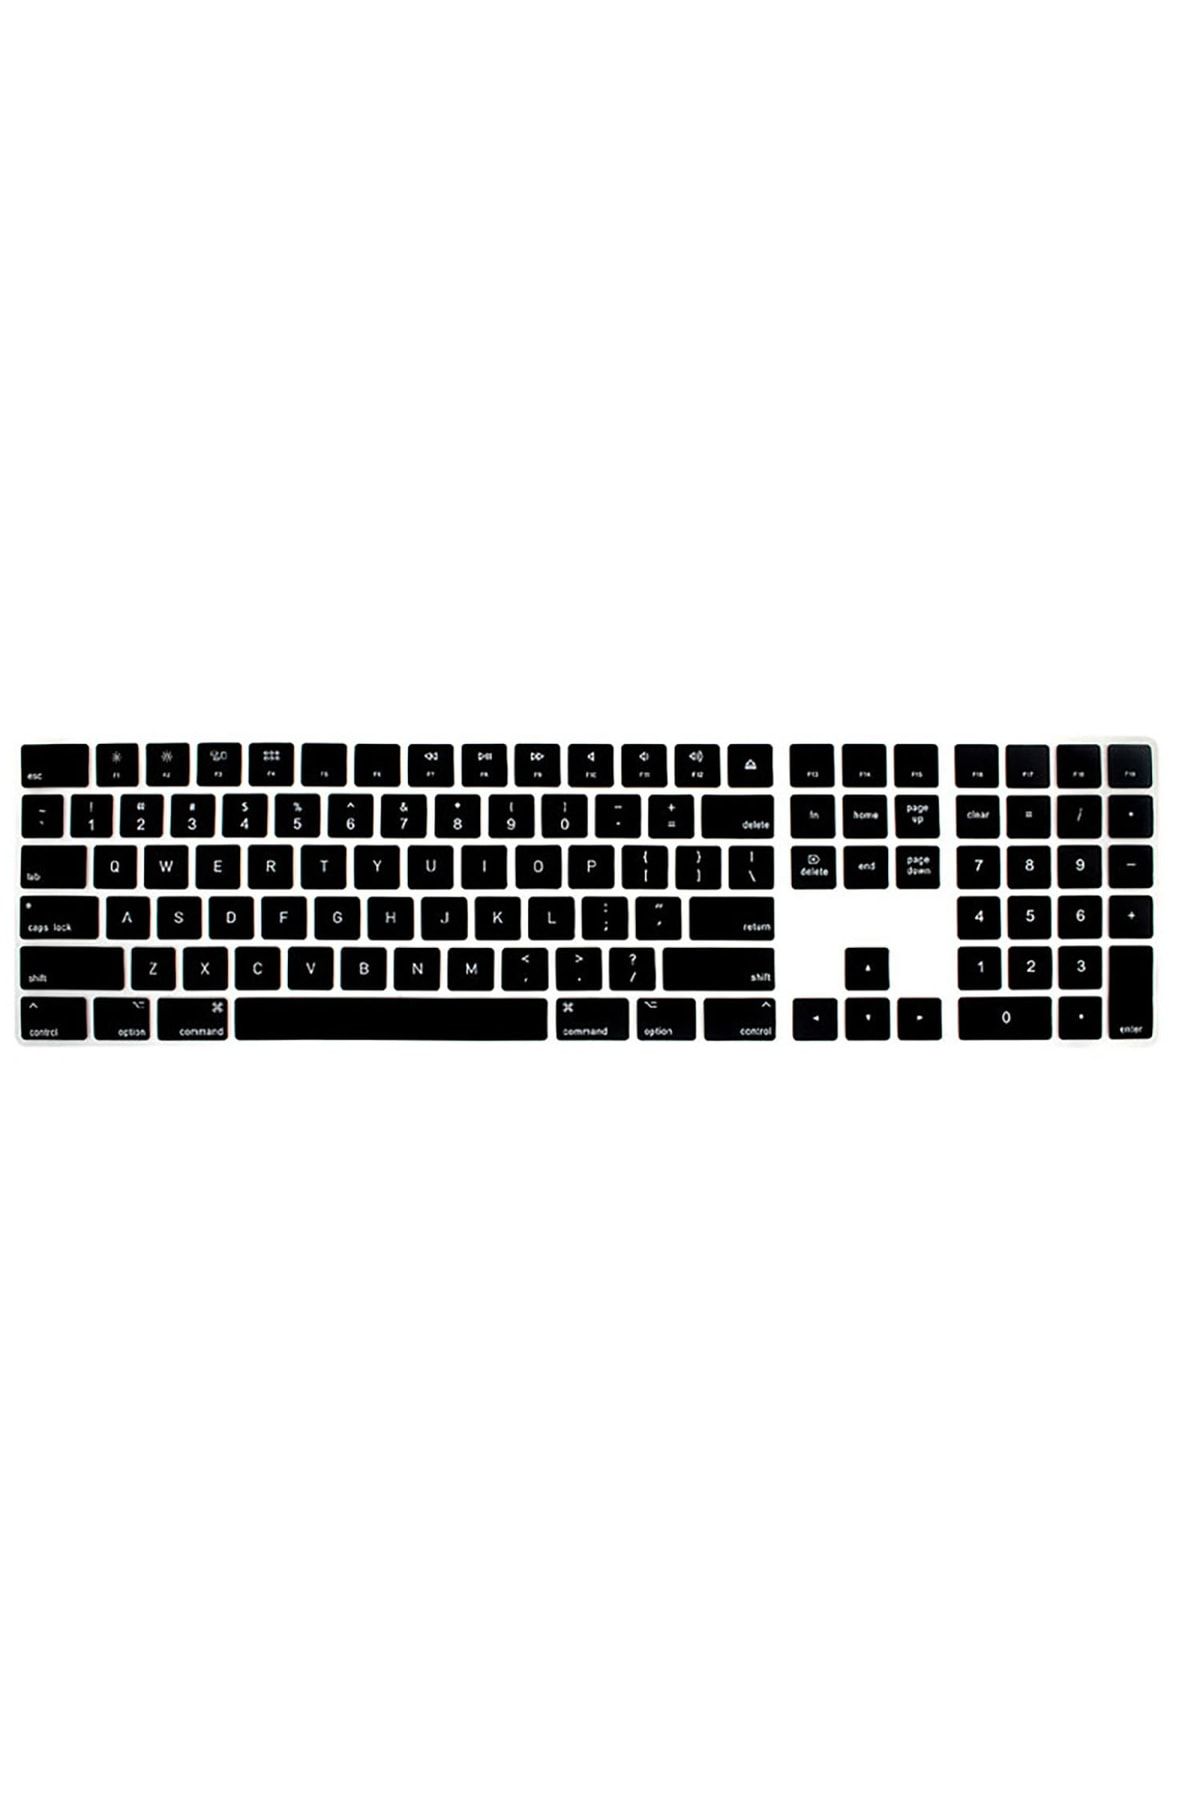 Microcase Apple Magic Keyboard Numerik A1843 Mq052tq/a Eu Q Klavye Koruma Silikonu - Siyah Al3550